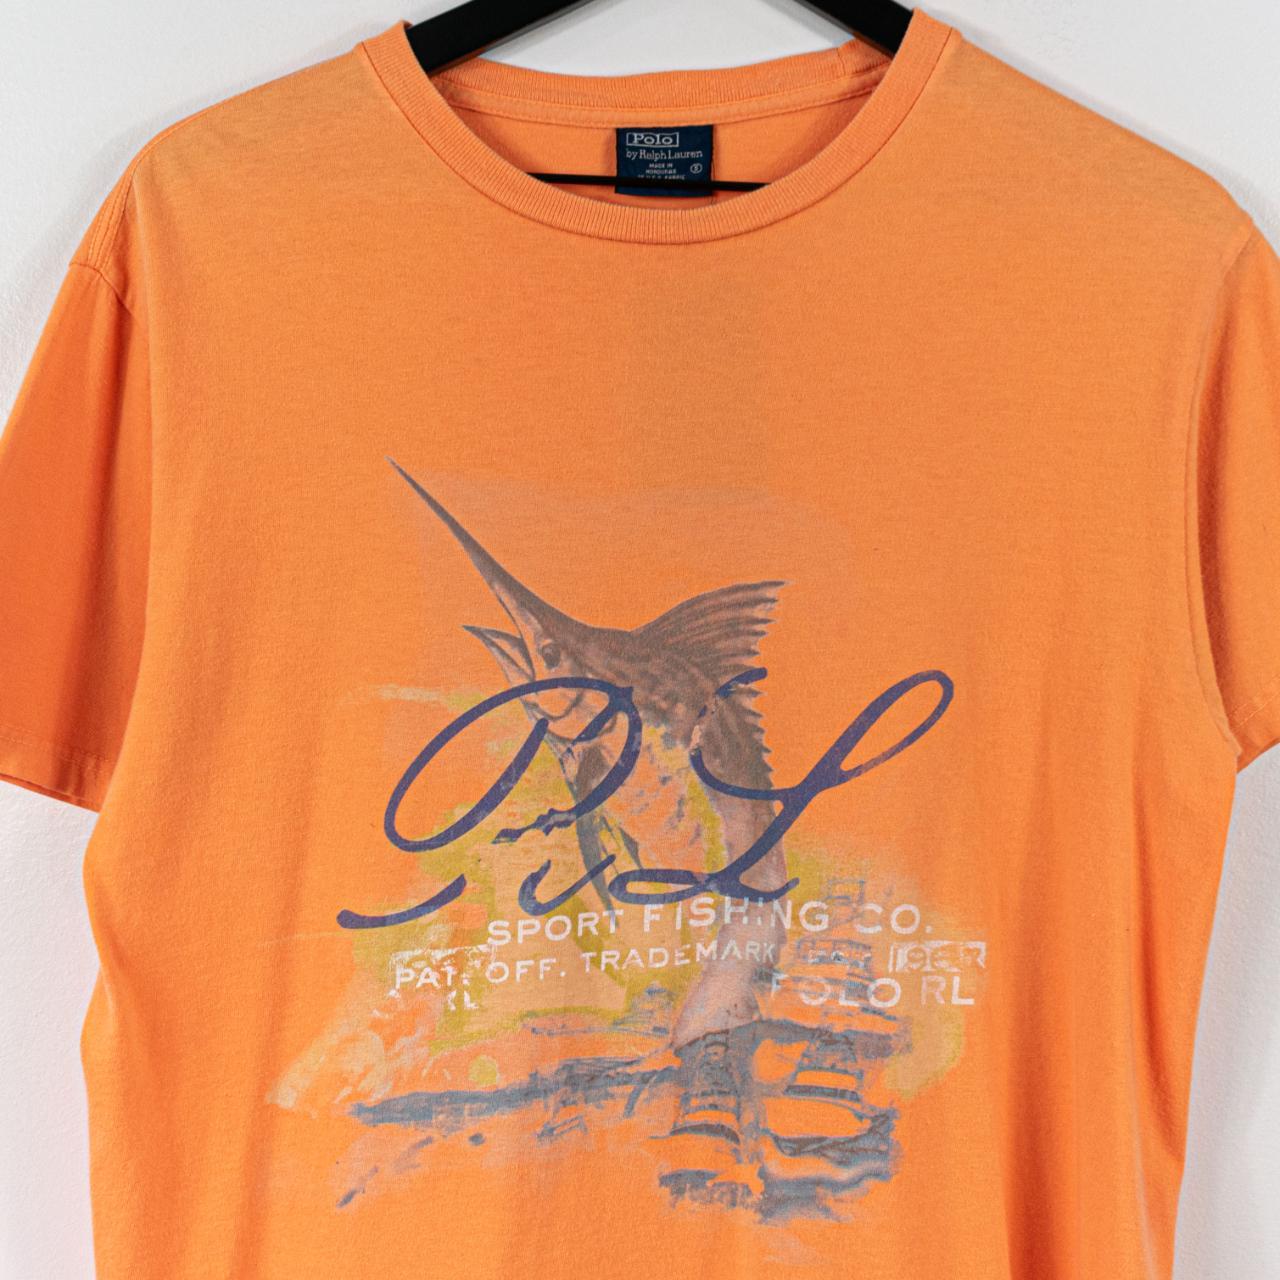 Vintage 90s Polo Ralph Lauren Sport Fishing T-Shirt - Depop